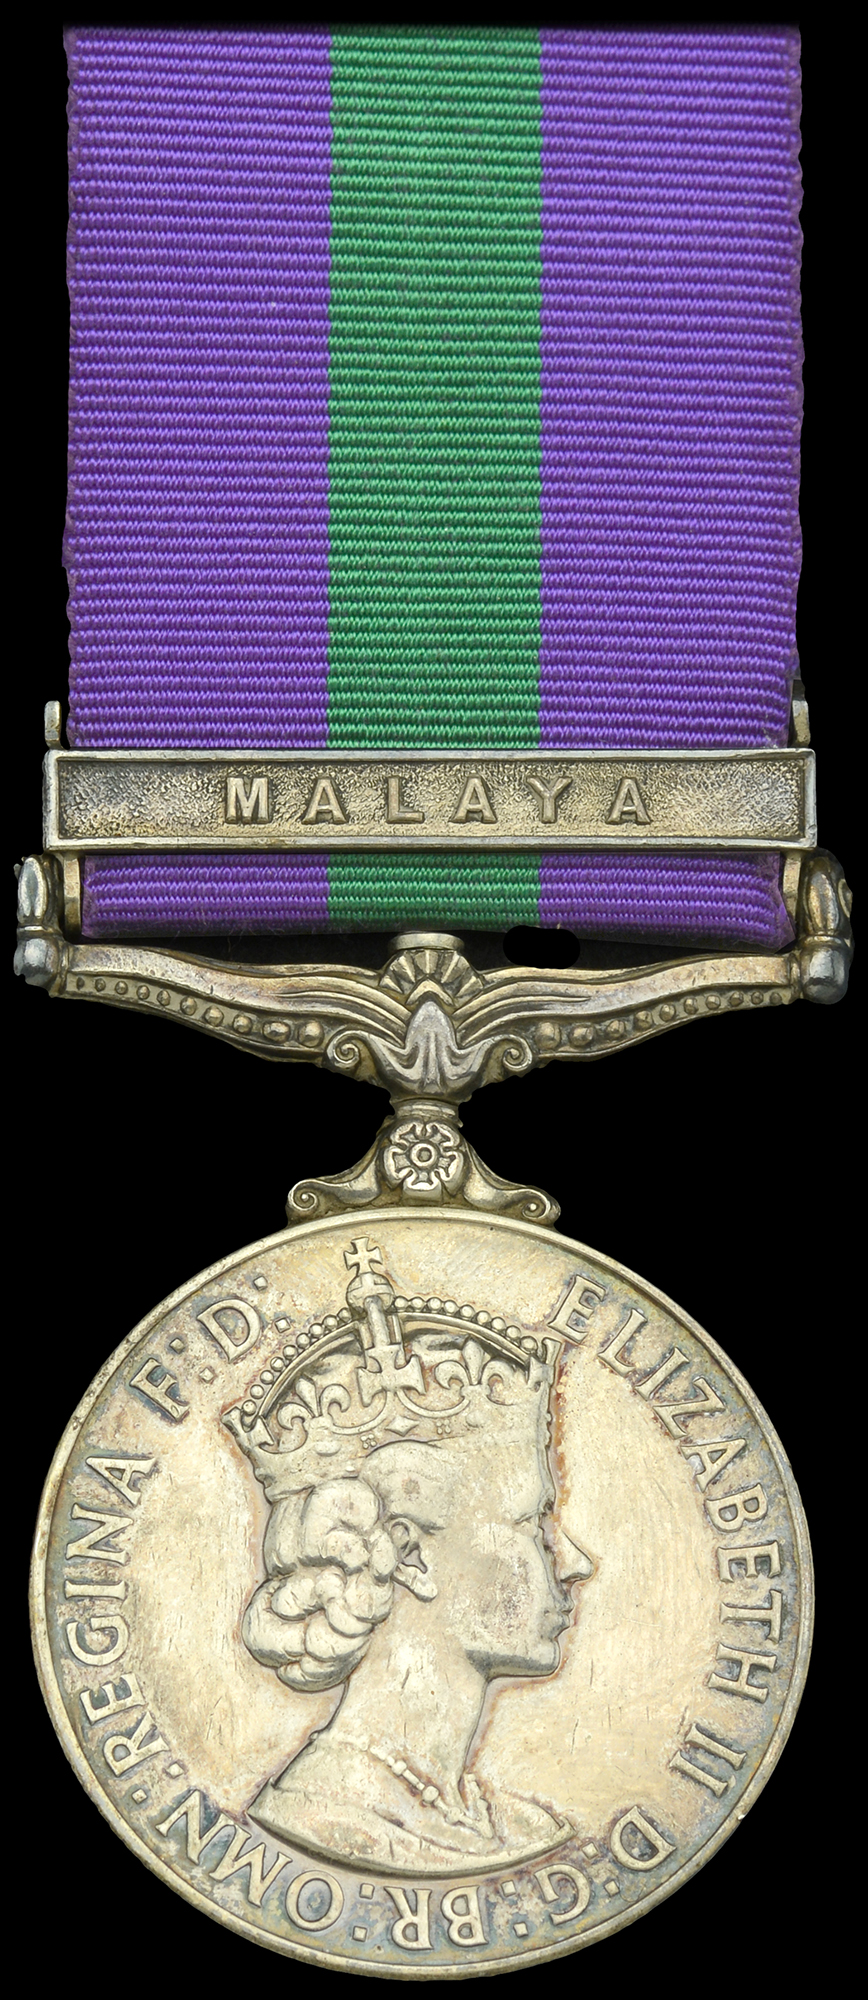 General Service 1918-62, 1 clasp, Malaya, E.II.R. (14444318 Sgt. J. Collins, R.B.) edge brui...